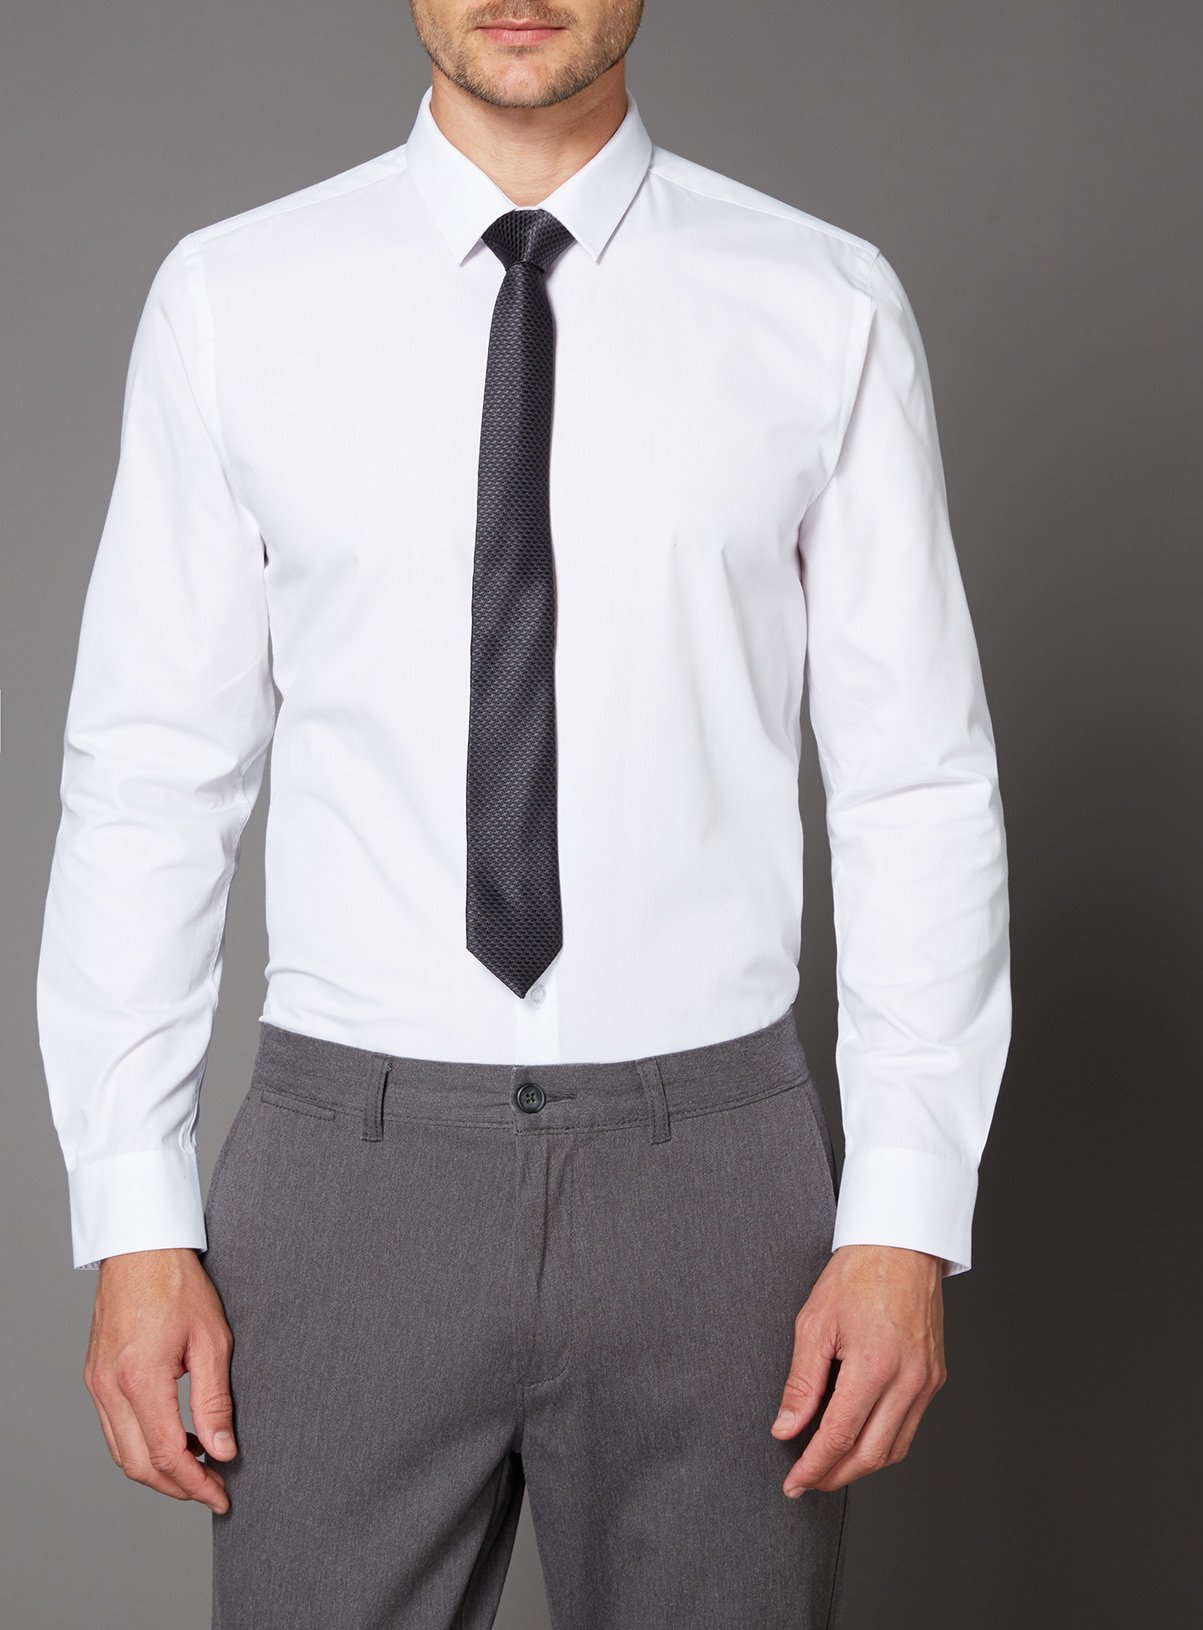 White Slim Fit Shirt \u0026 Black Tie Set 